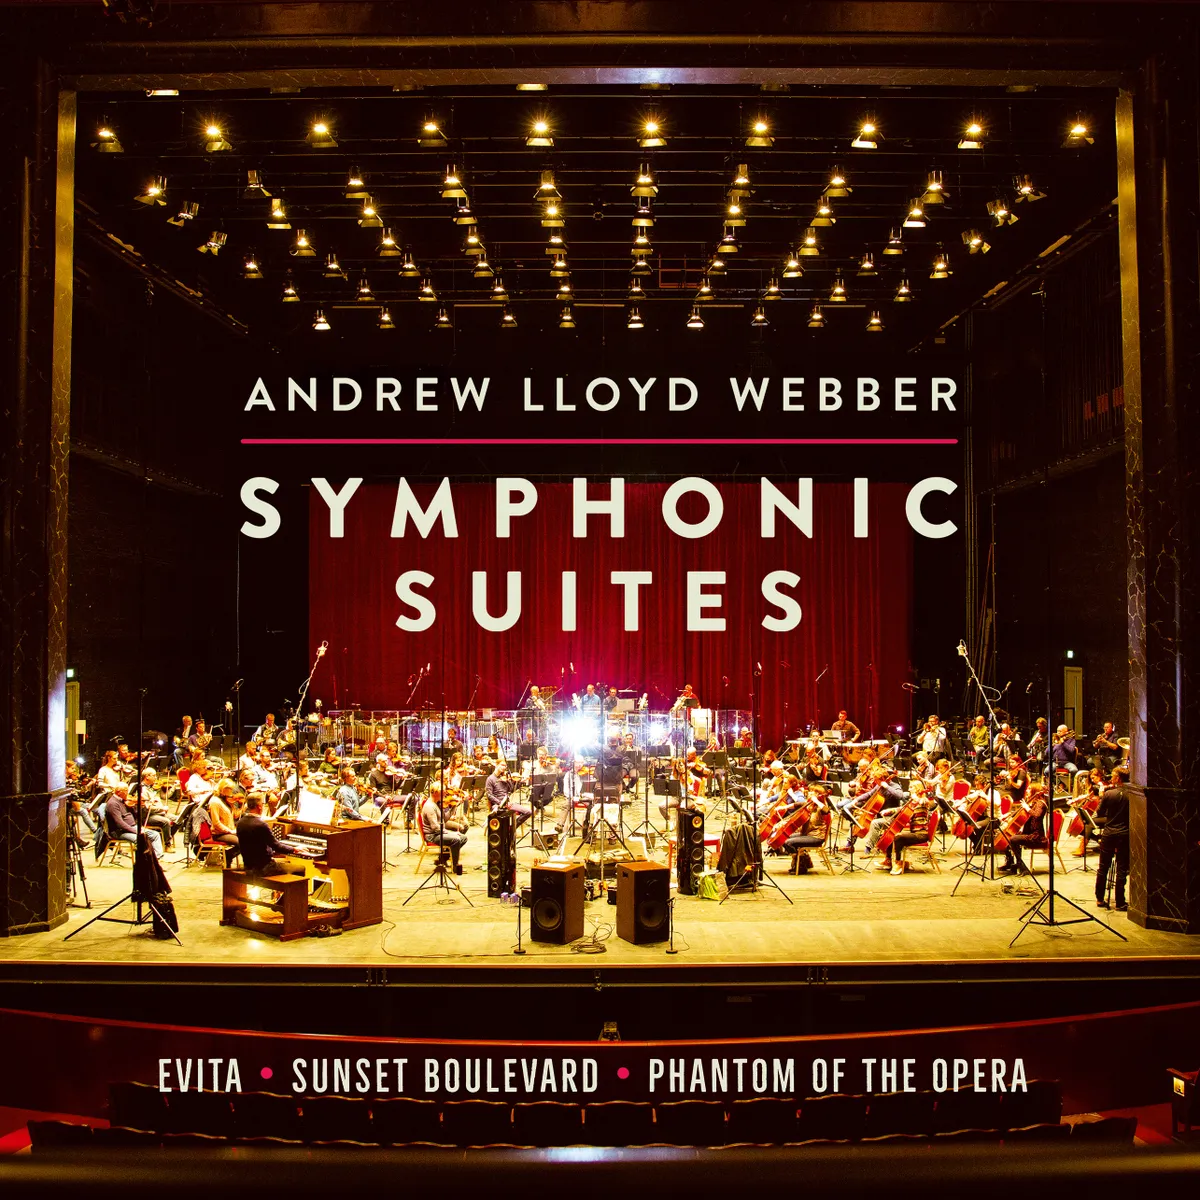 Album Artwork_Symphonic Suites _Andrew Lloyd Webber